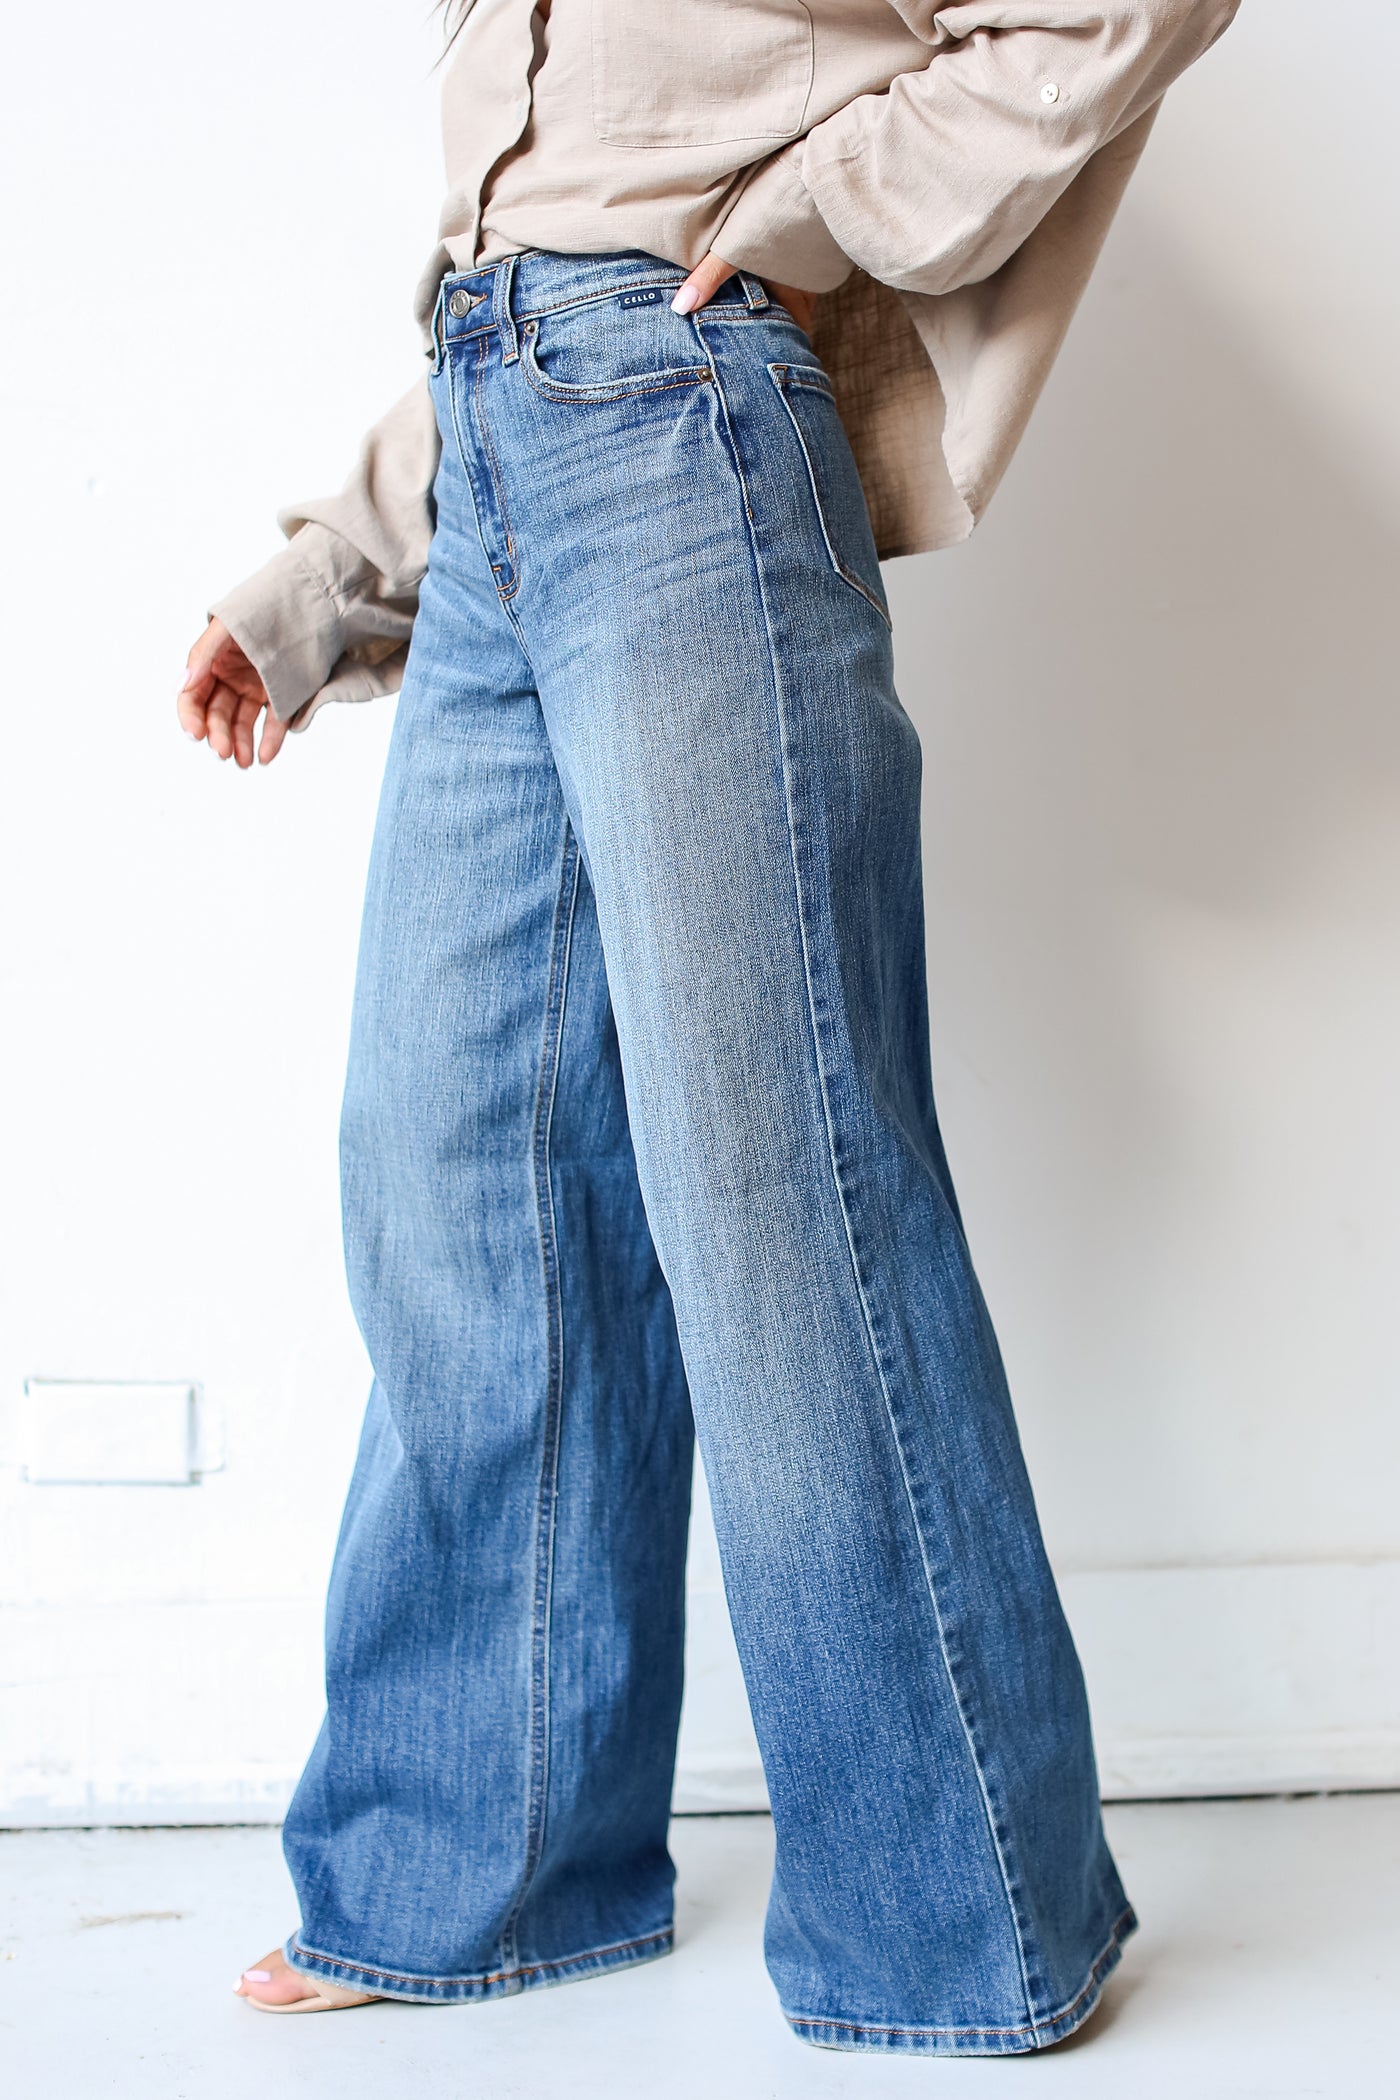 Leg Wash Medium – Up Dress ShopDressUp | Trendy Wide Jeans